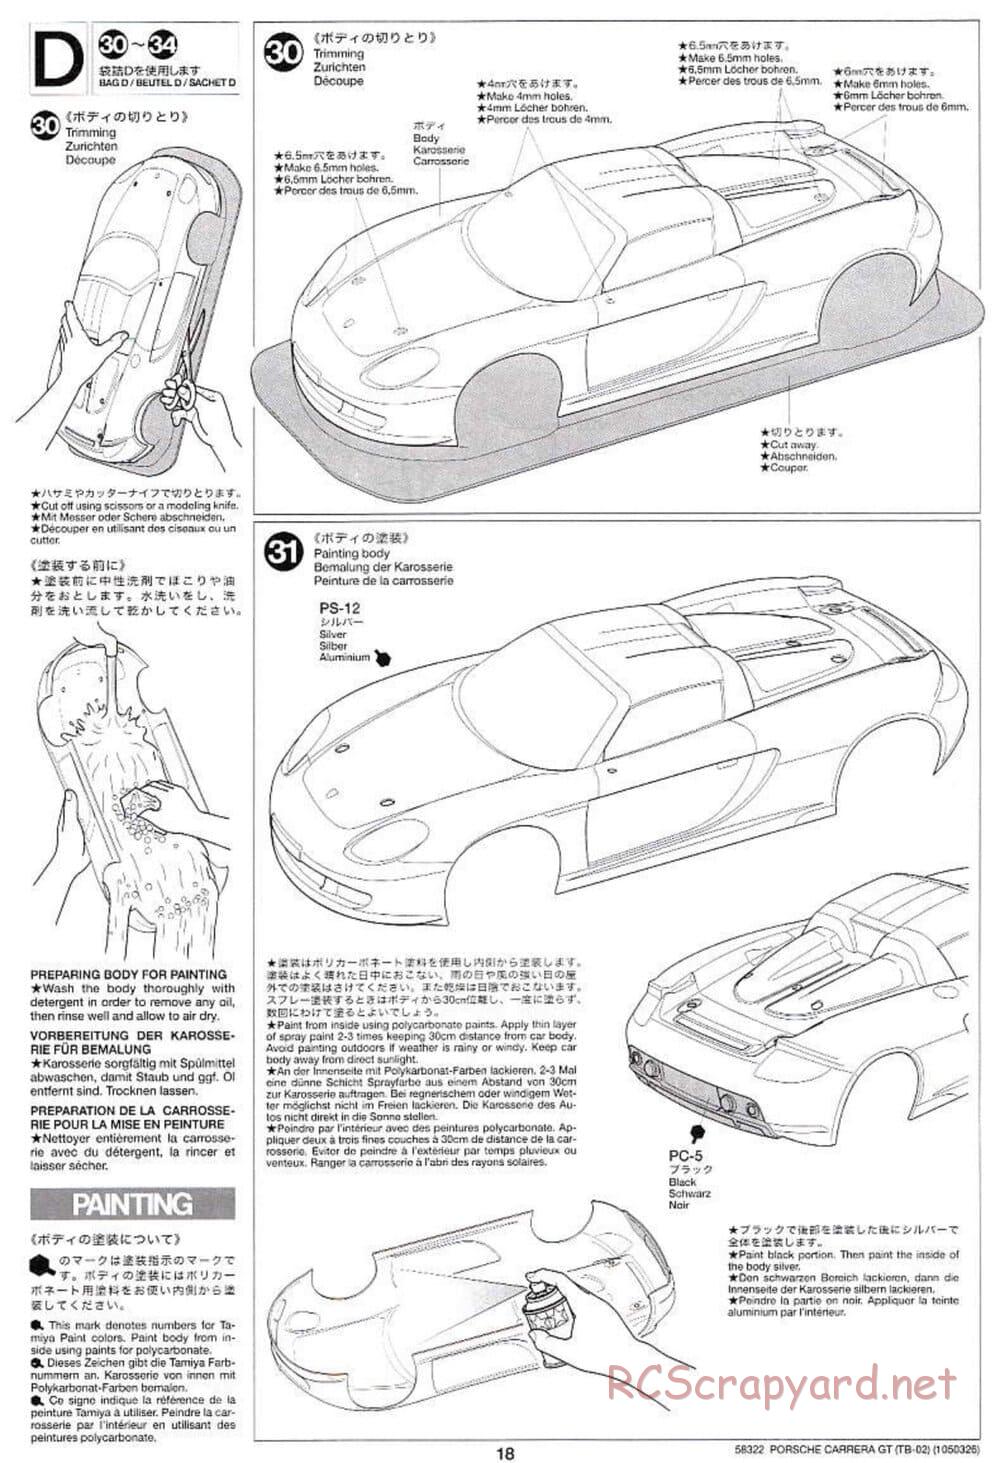 Tamiya - Porsche Carrera GT - TB-02 Chassis - Manual - Page 18